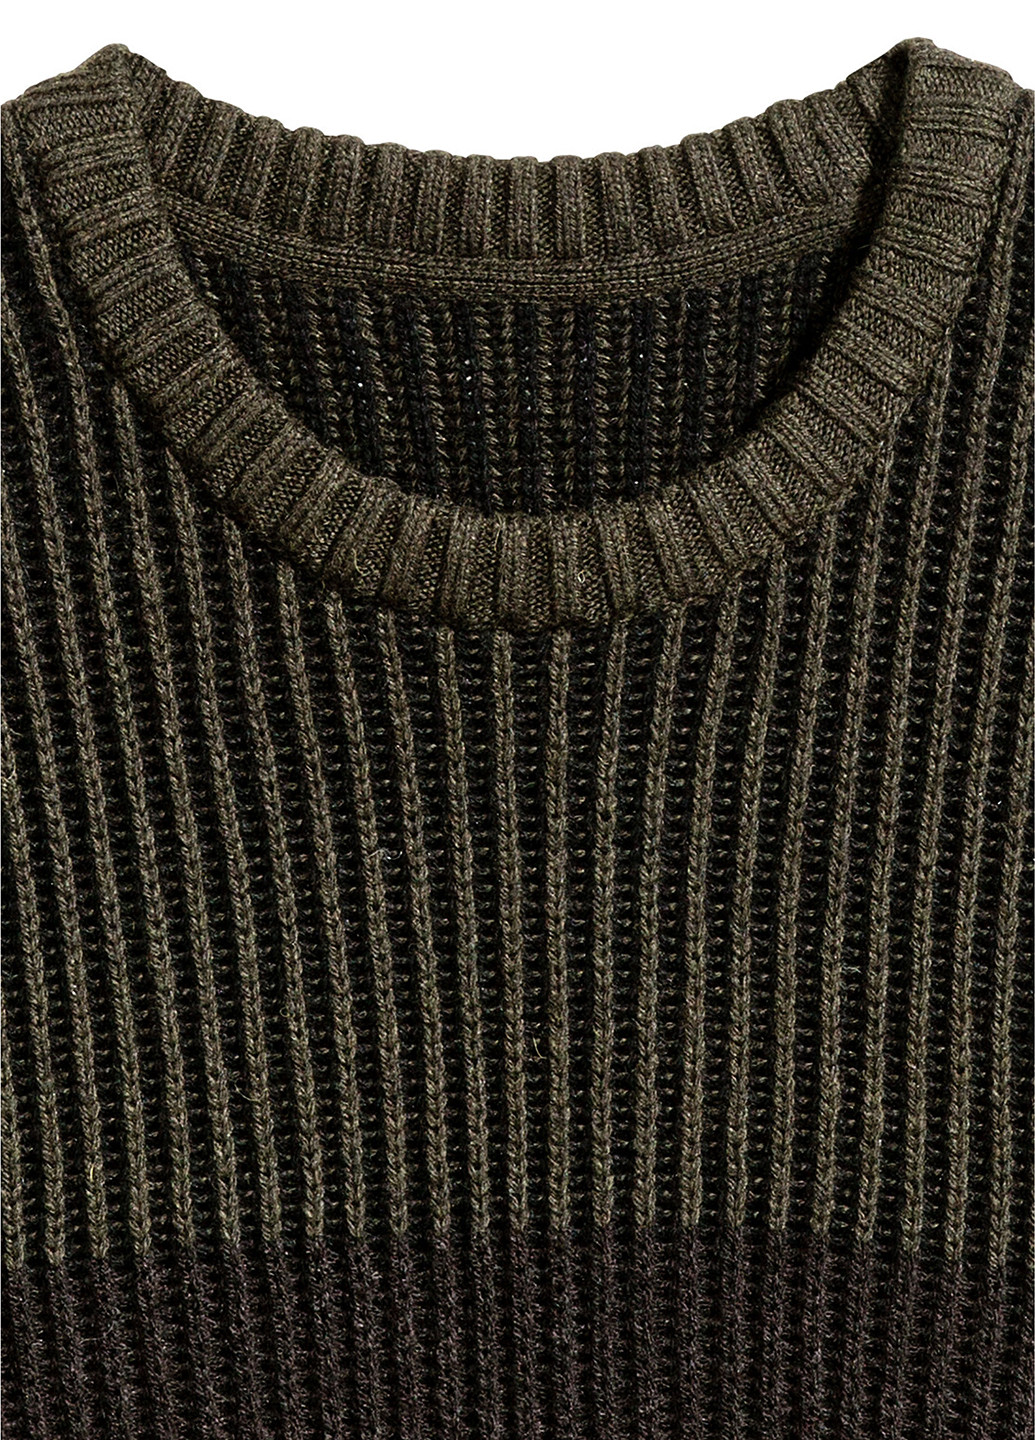 Оливковый (хаки) зимний свитер H&M